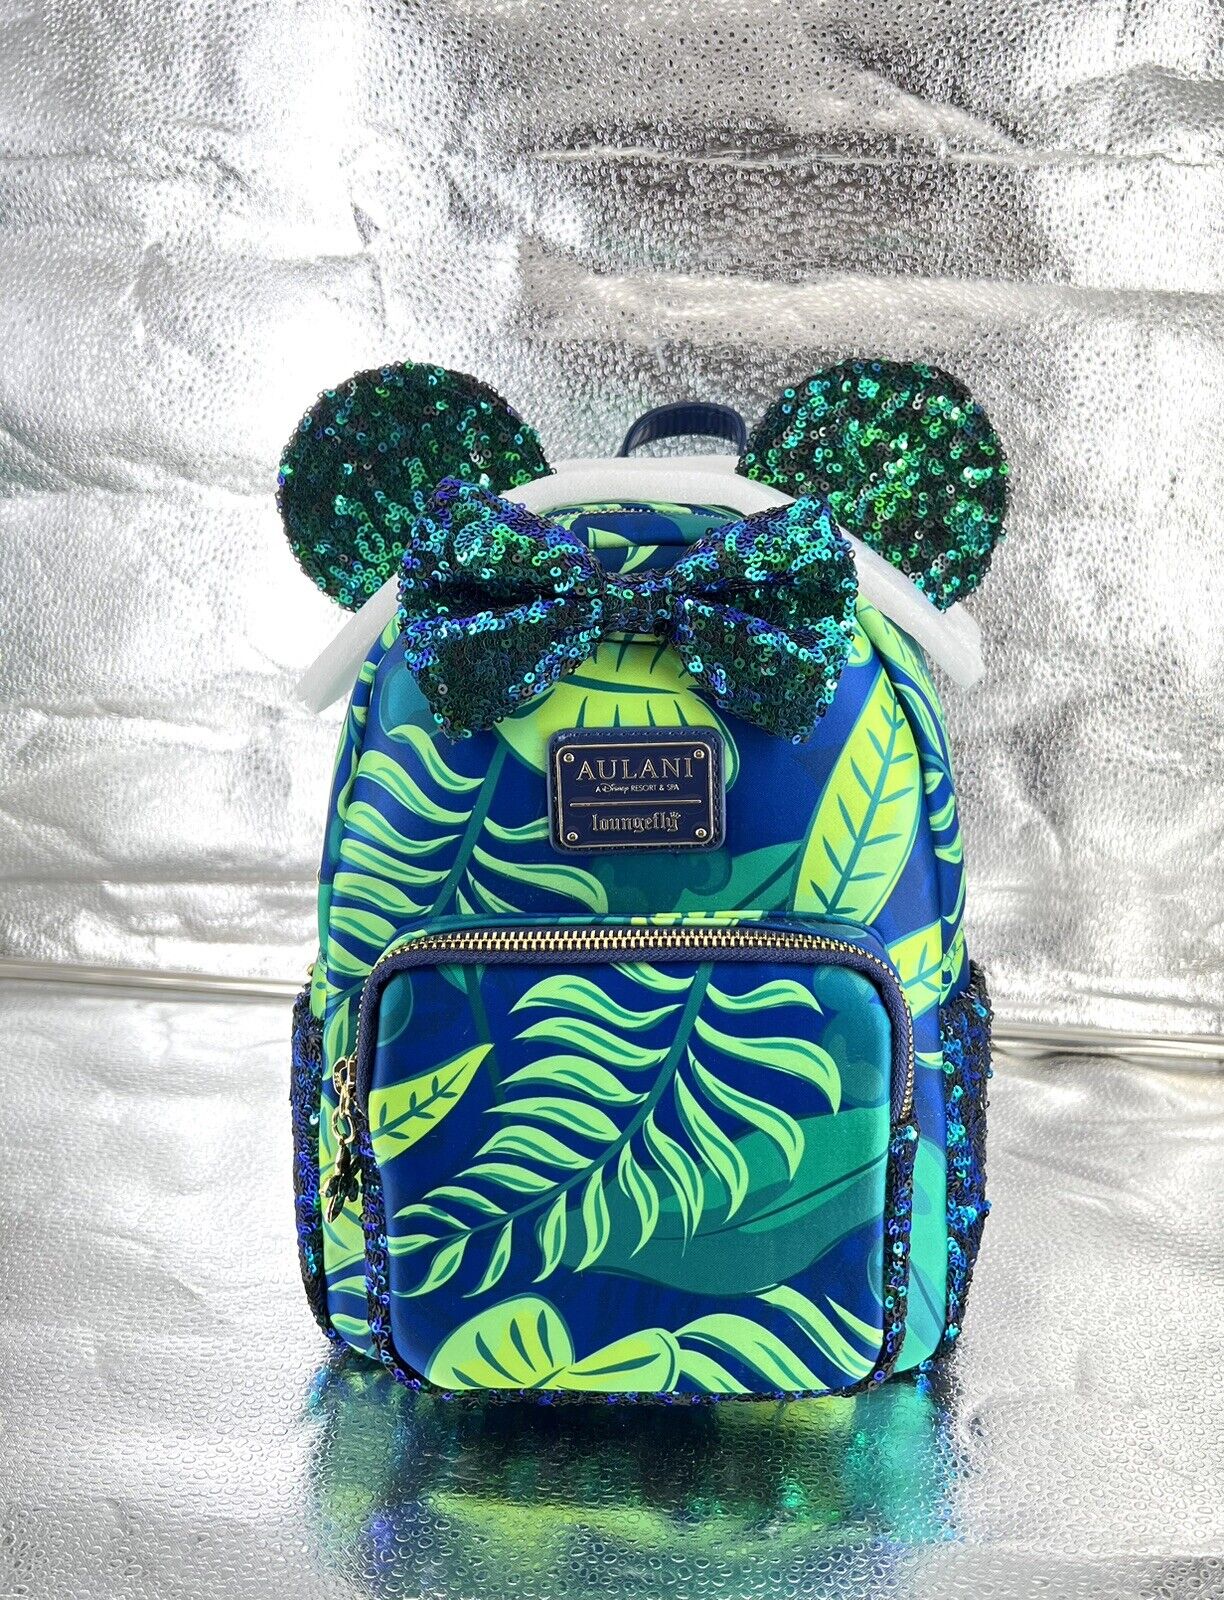 BNWT Disney Aulani Paradise Vibes Loungefly Backpack Hidden Mickeys Front & Back